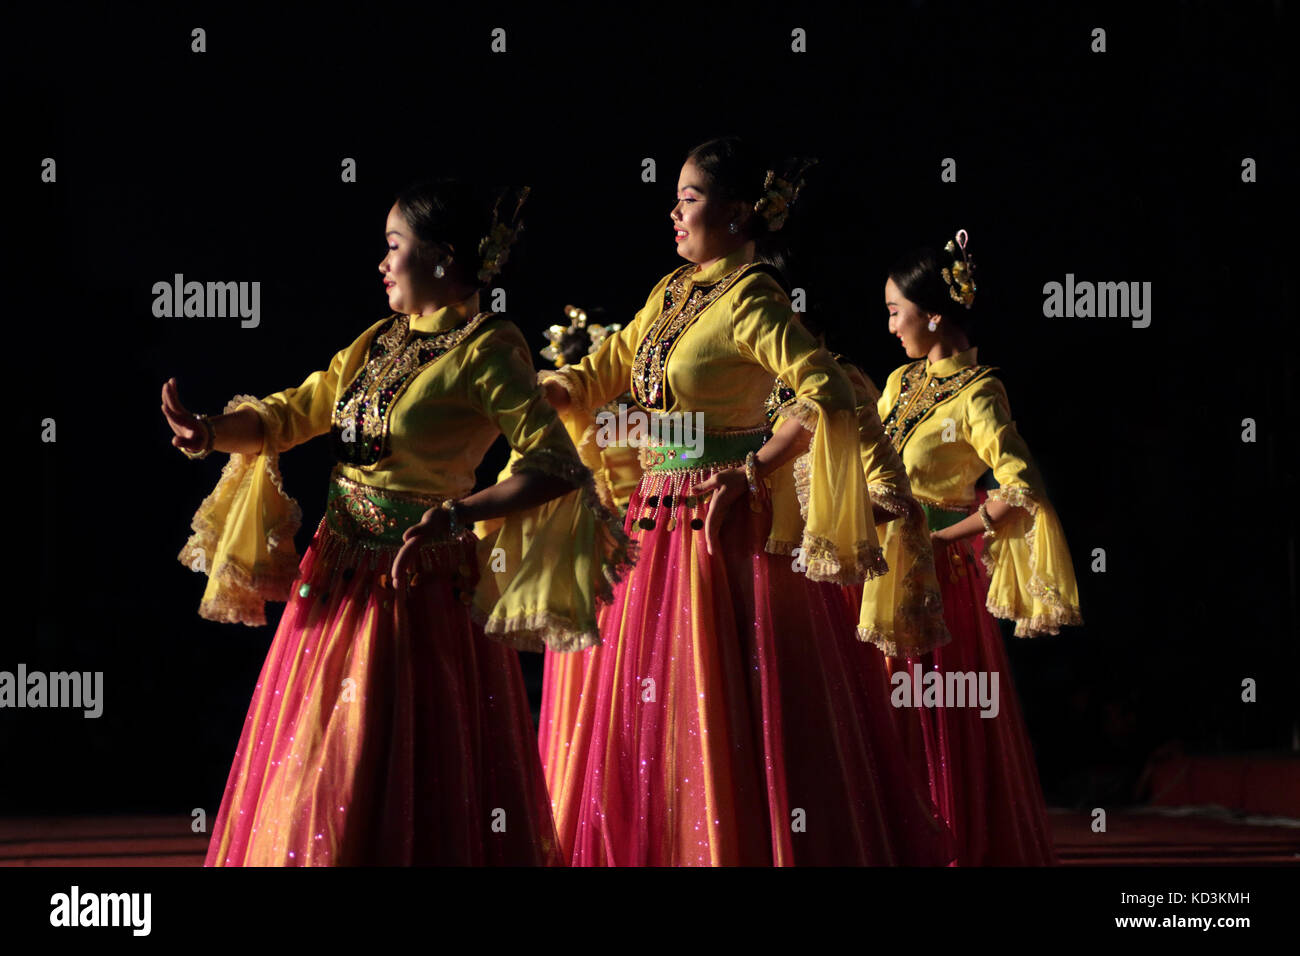 Malaysian dancers performing traditional Malay dance in Malaysia. Stock Photo